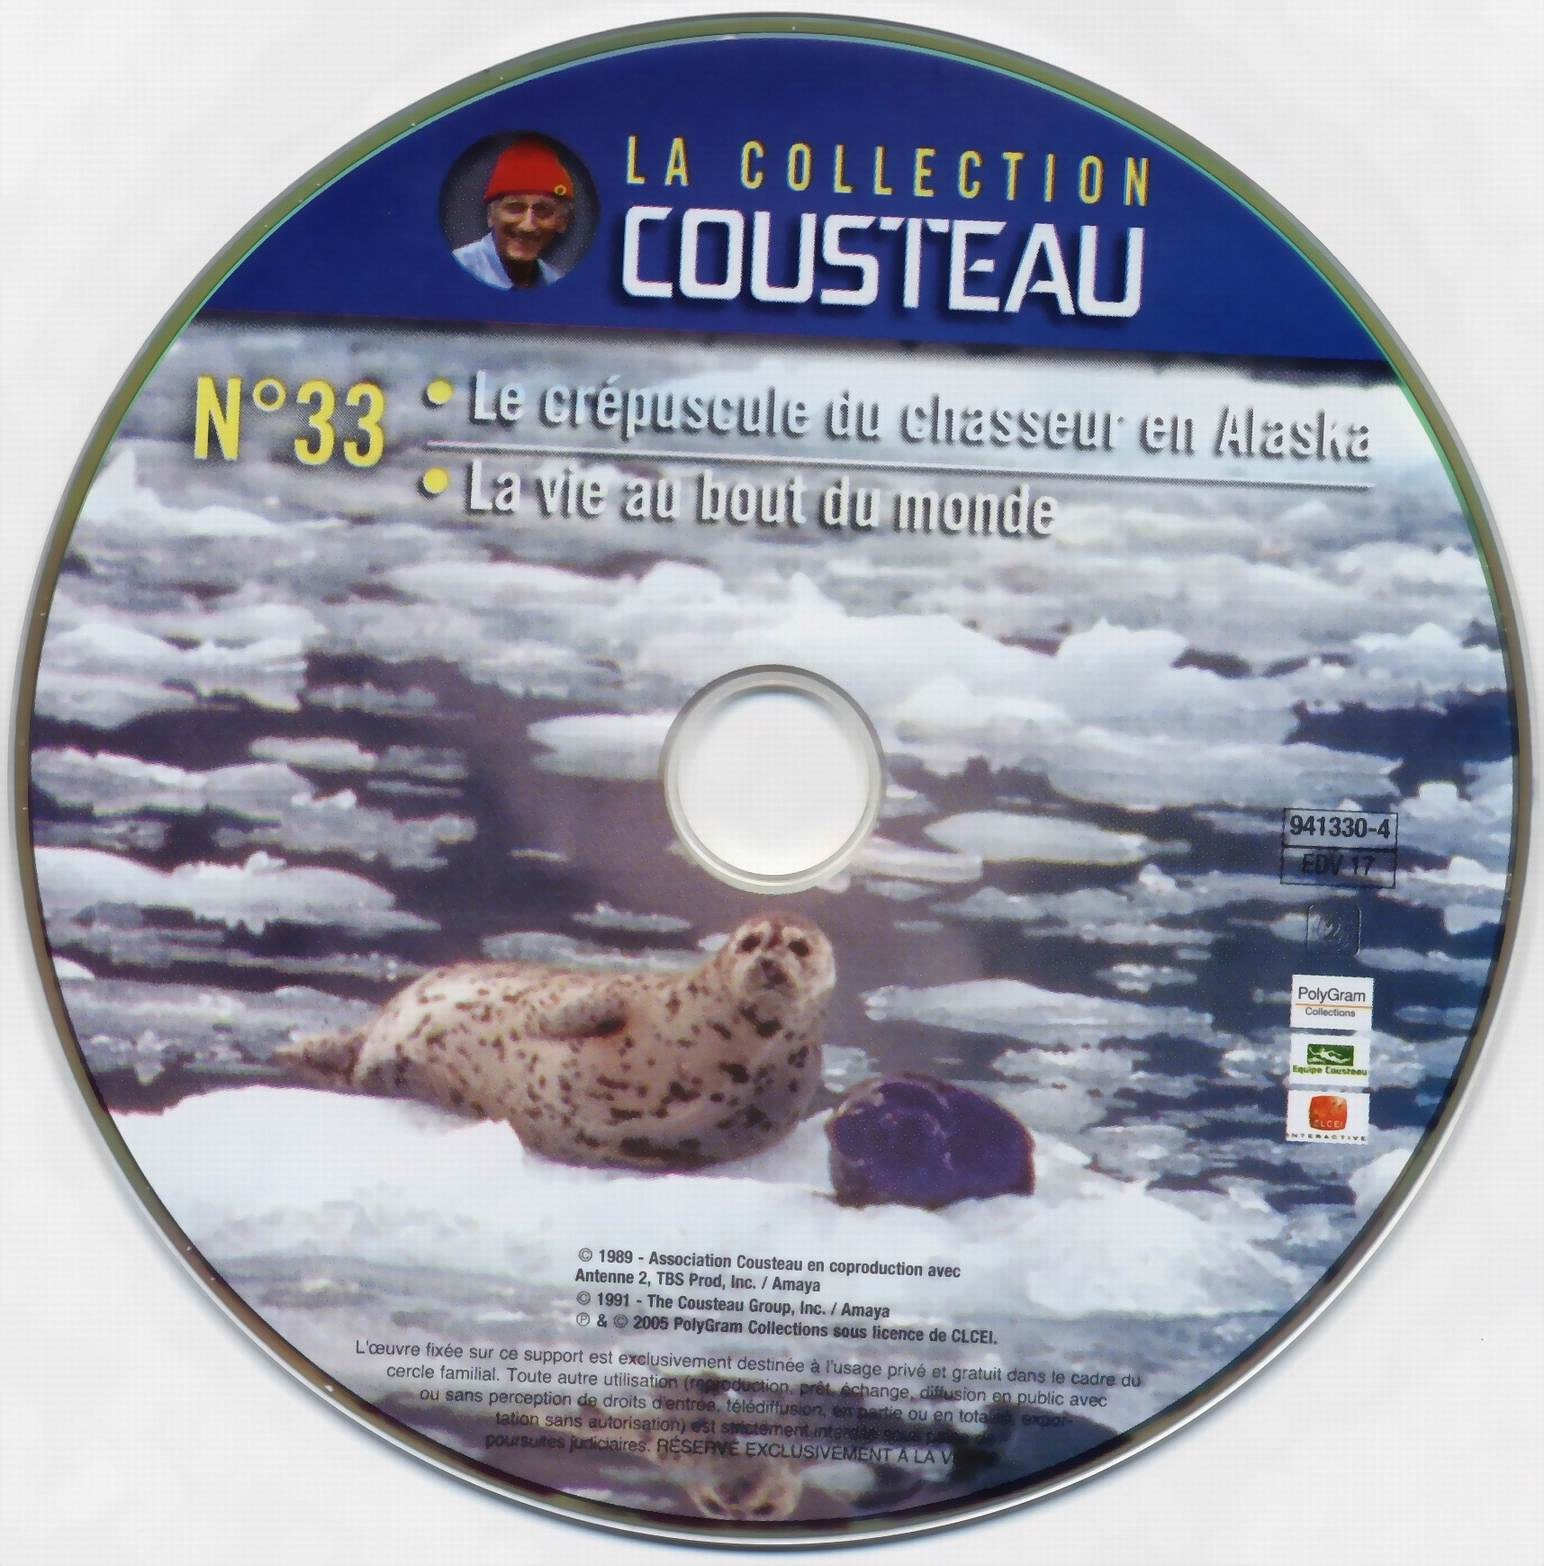 Cousteau Collection vol 33